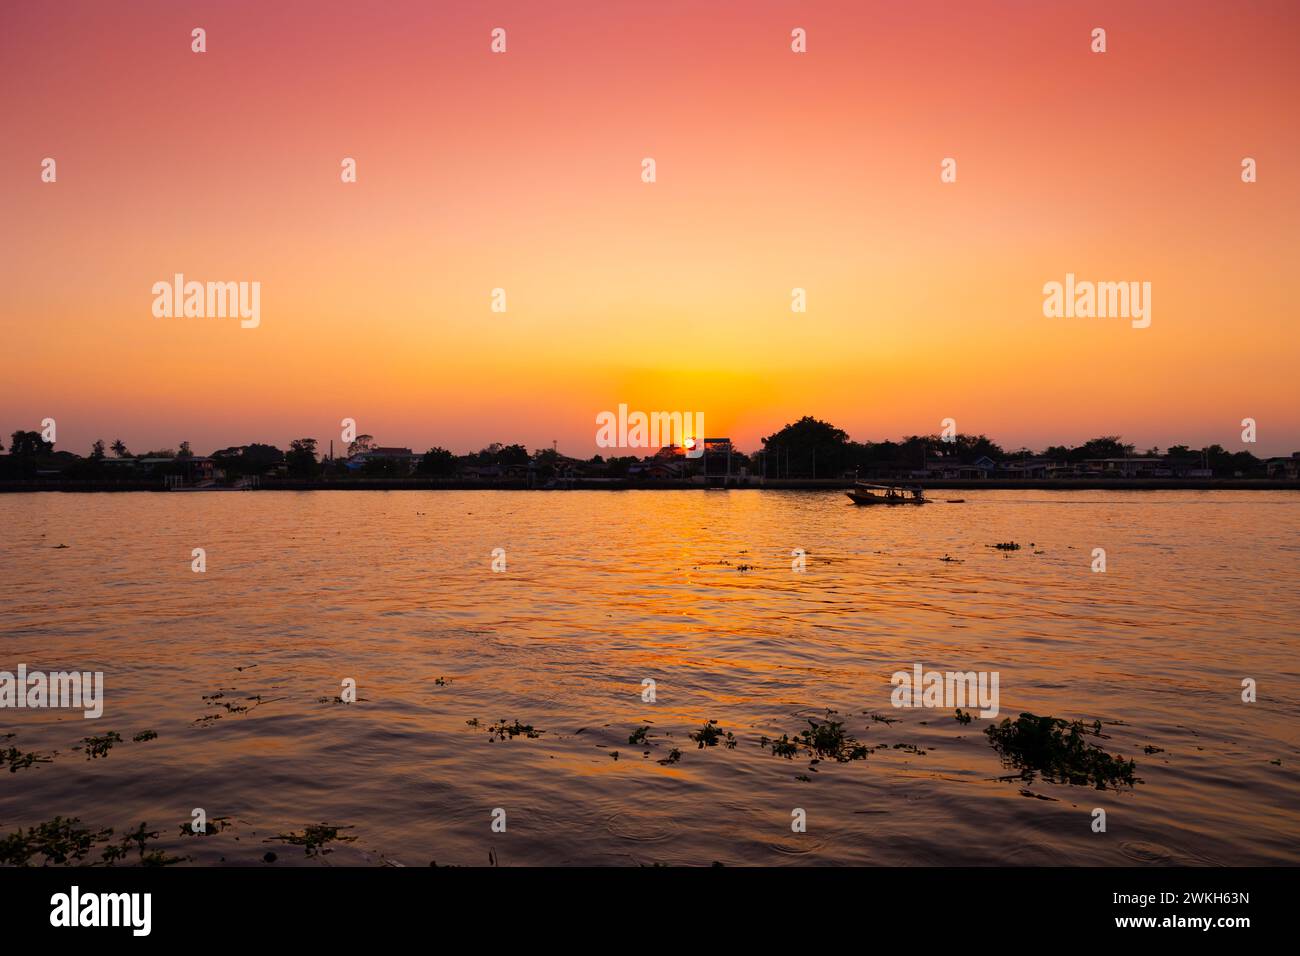 dusk dawn river view sunset orange sky. evening silhouette boat quiet calm chaophraya riverside landscape Stock Photo